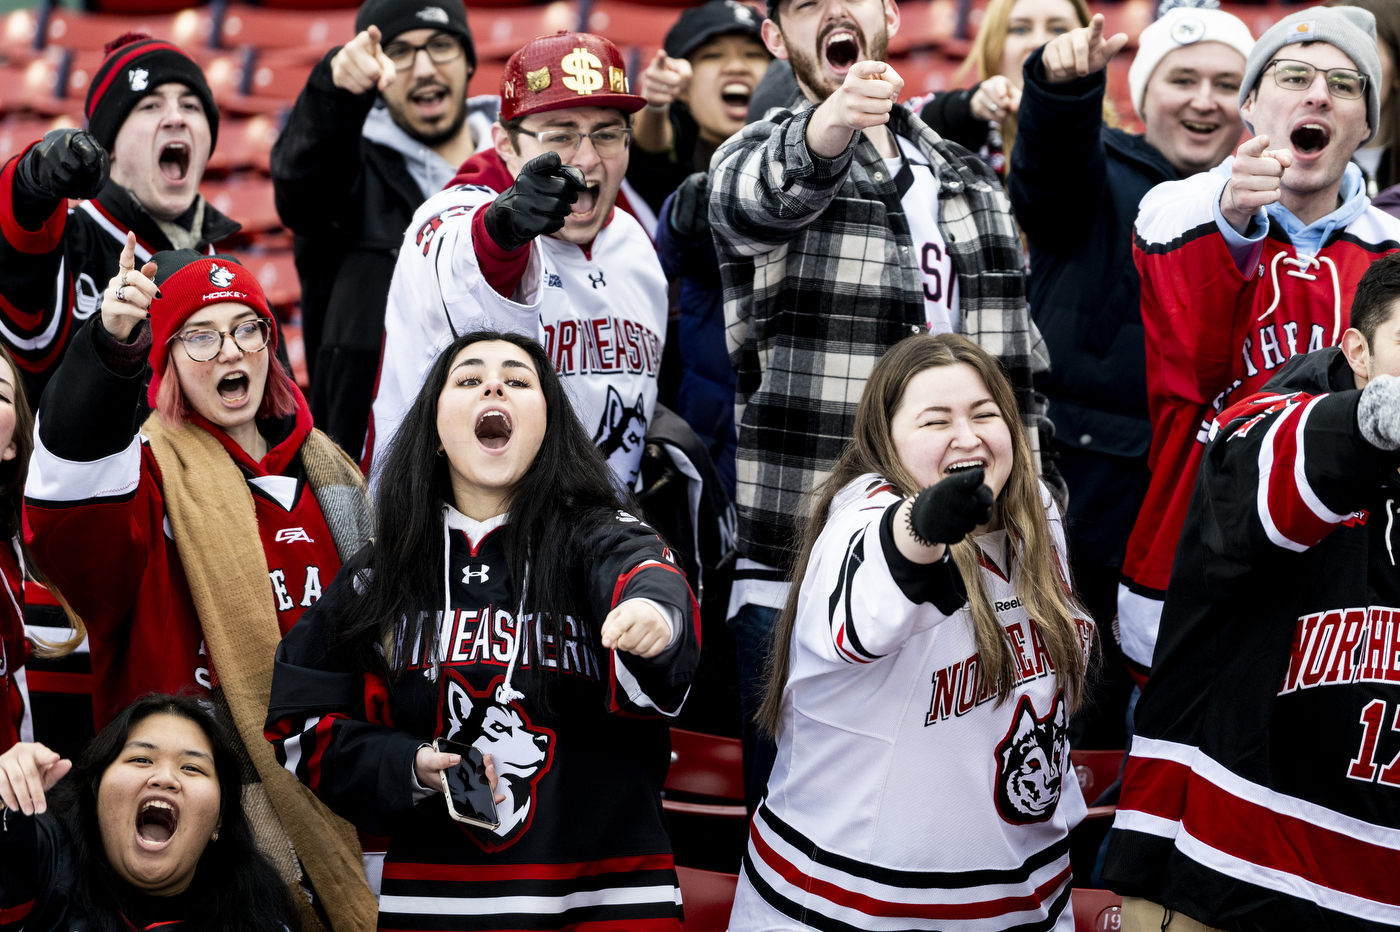 A group of people wearing Northeastern merchandise cheer on the university's hockey team. 